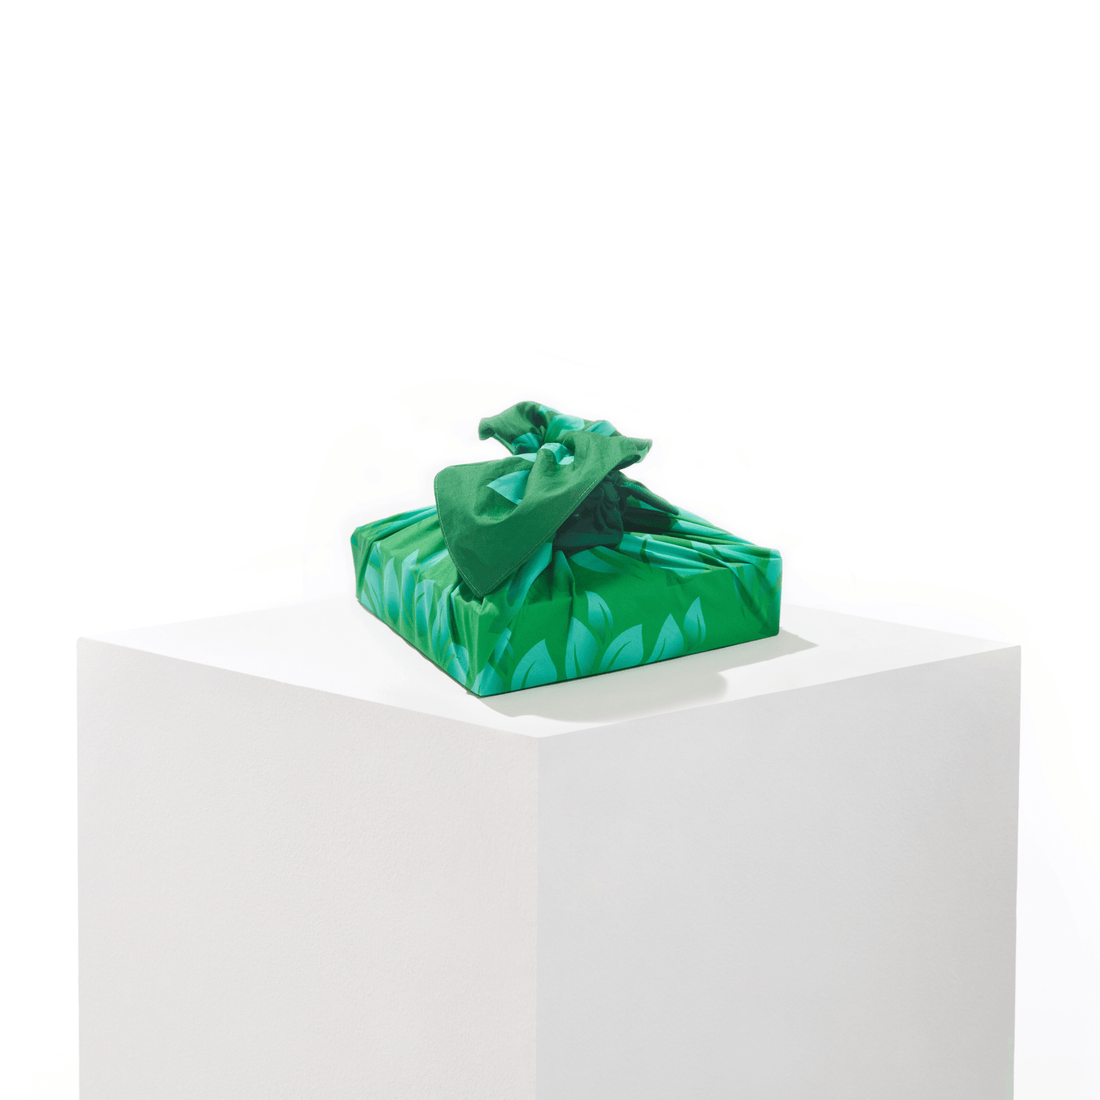 Prosper | 28" Furoshiki Gift Wrap by Rawbie Thring - Wrappr